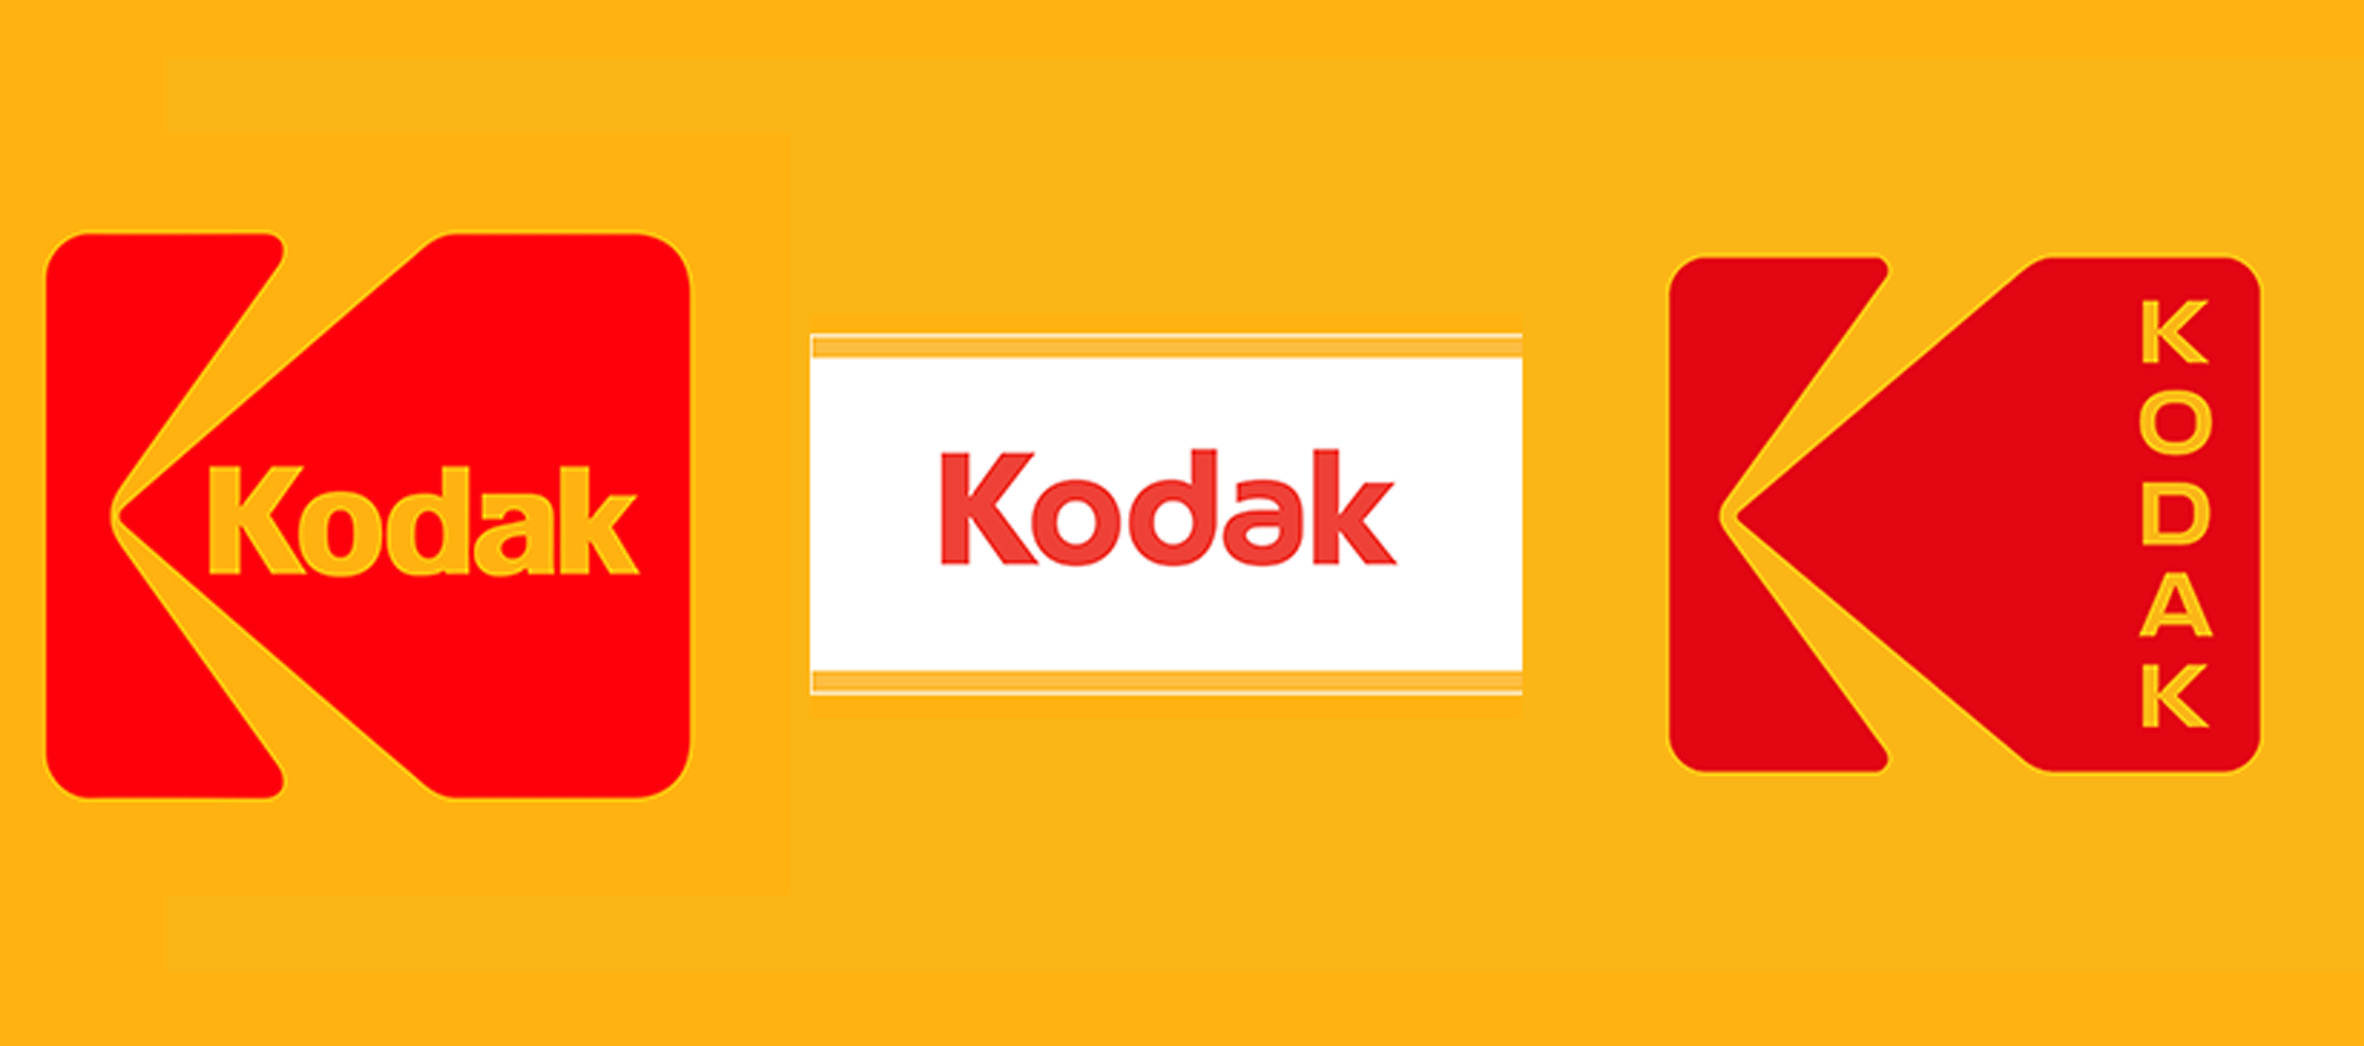 Kodak Logo - Kodak rebrands with retro-style logo